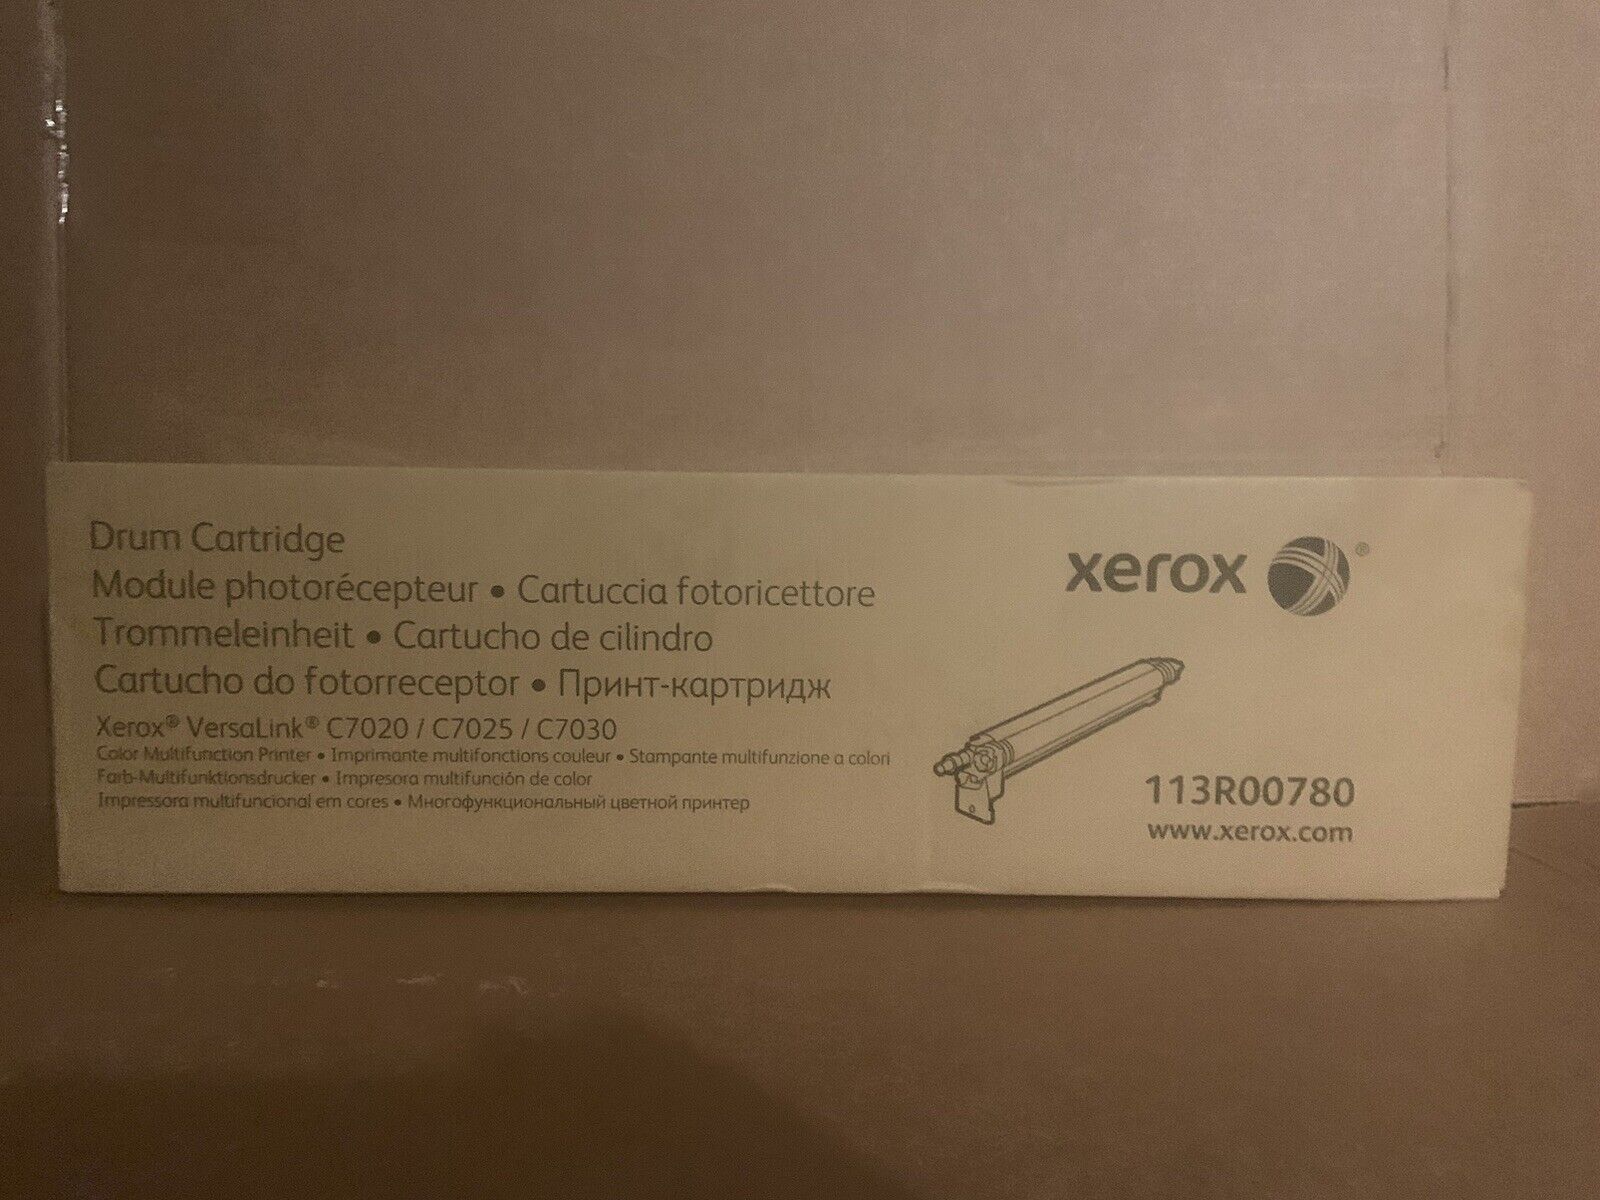 Genuine Xerox 113R00780 Drum Cartridge VersaLink C7020 C7025 C7030 Sealed